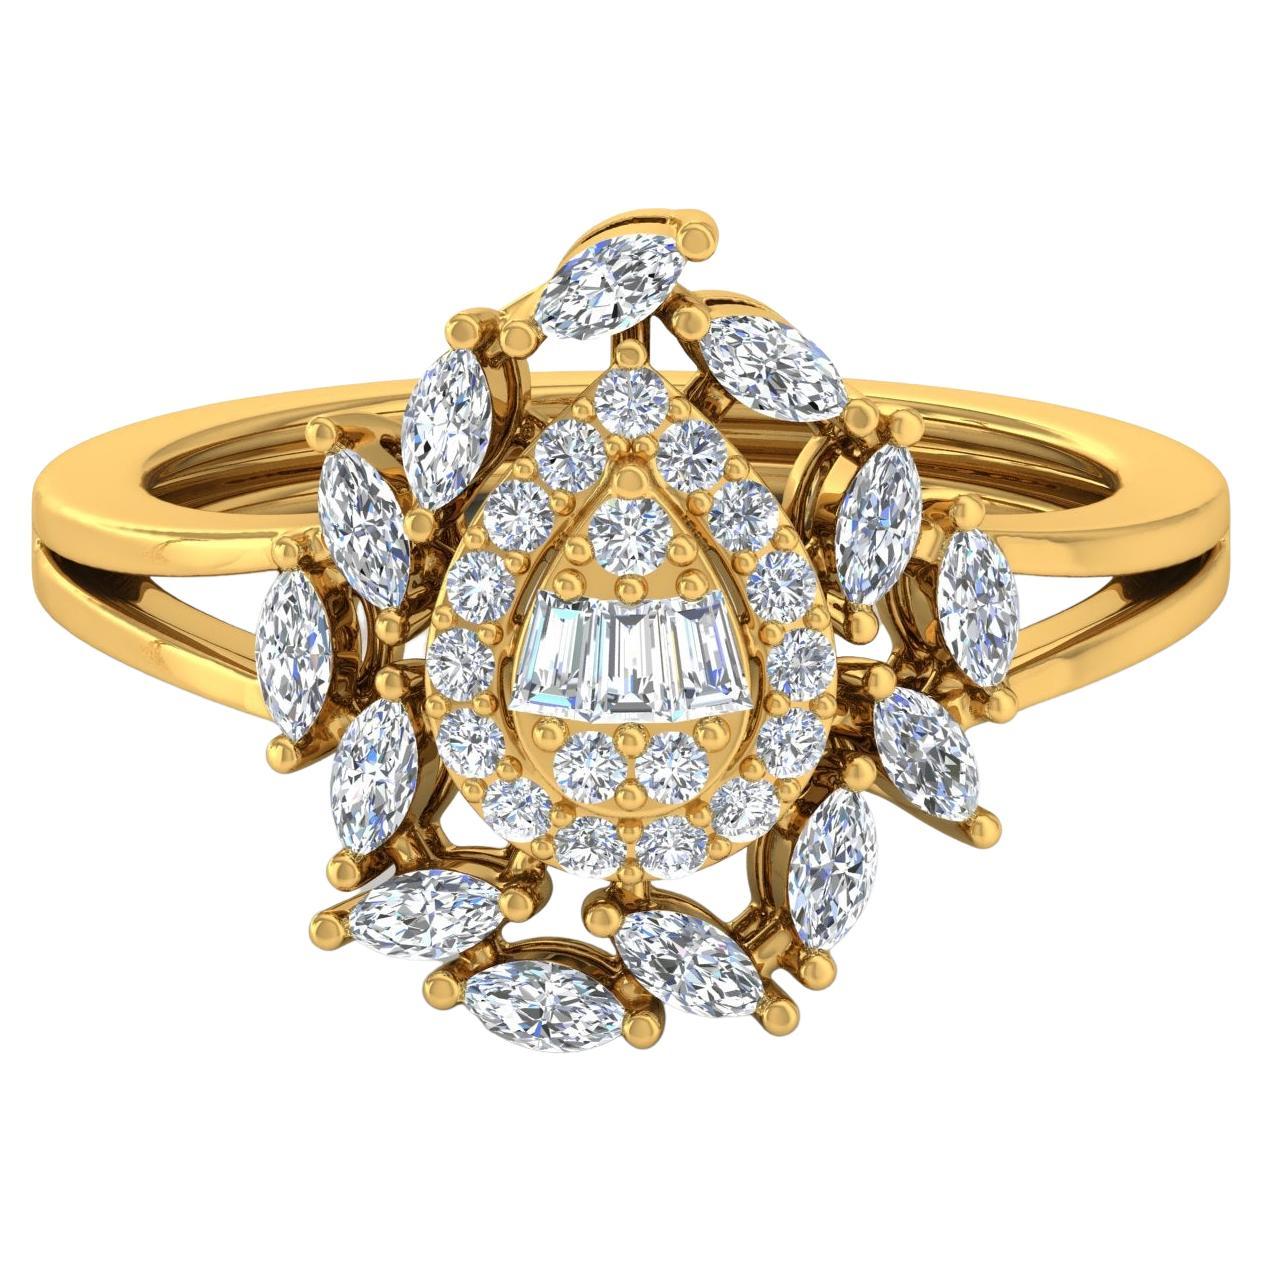 1 Carat Marquise Baguette Diamond Designer Ring 18 Karat Yellow Gold Jewelry For Sale